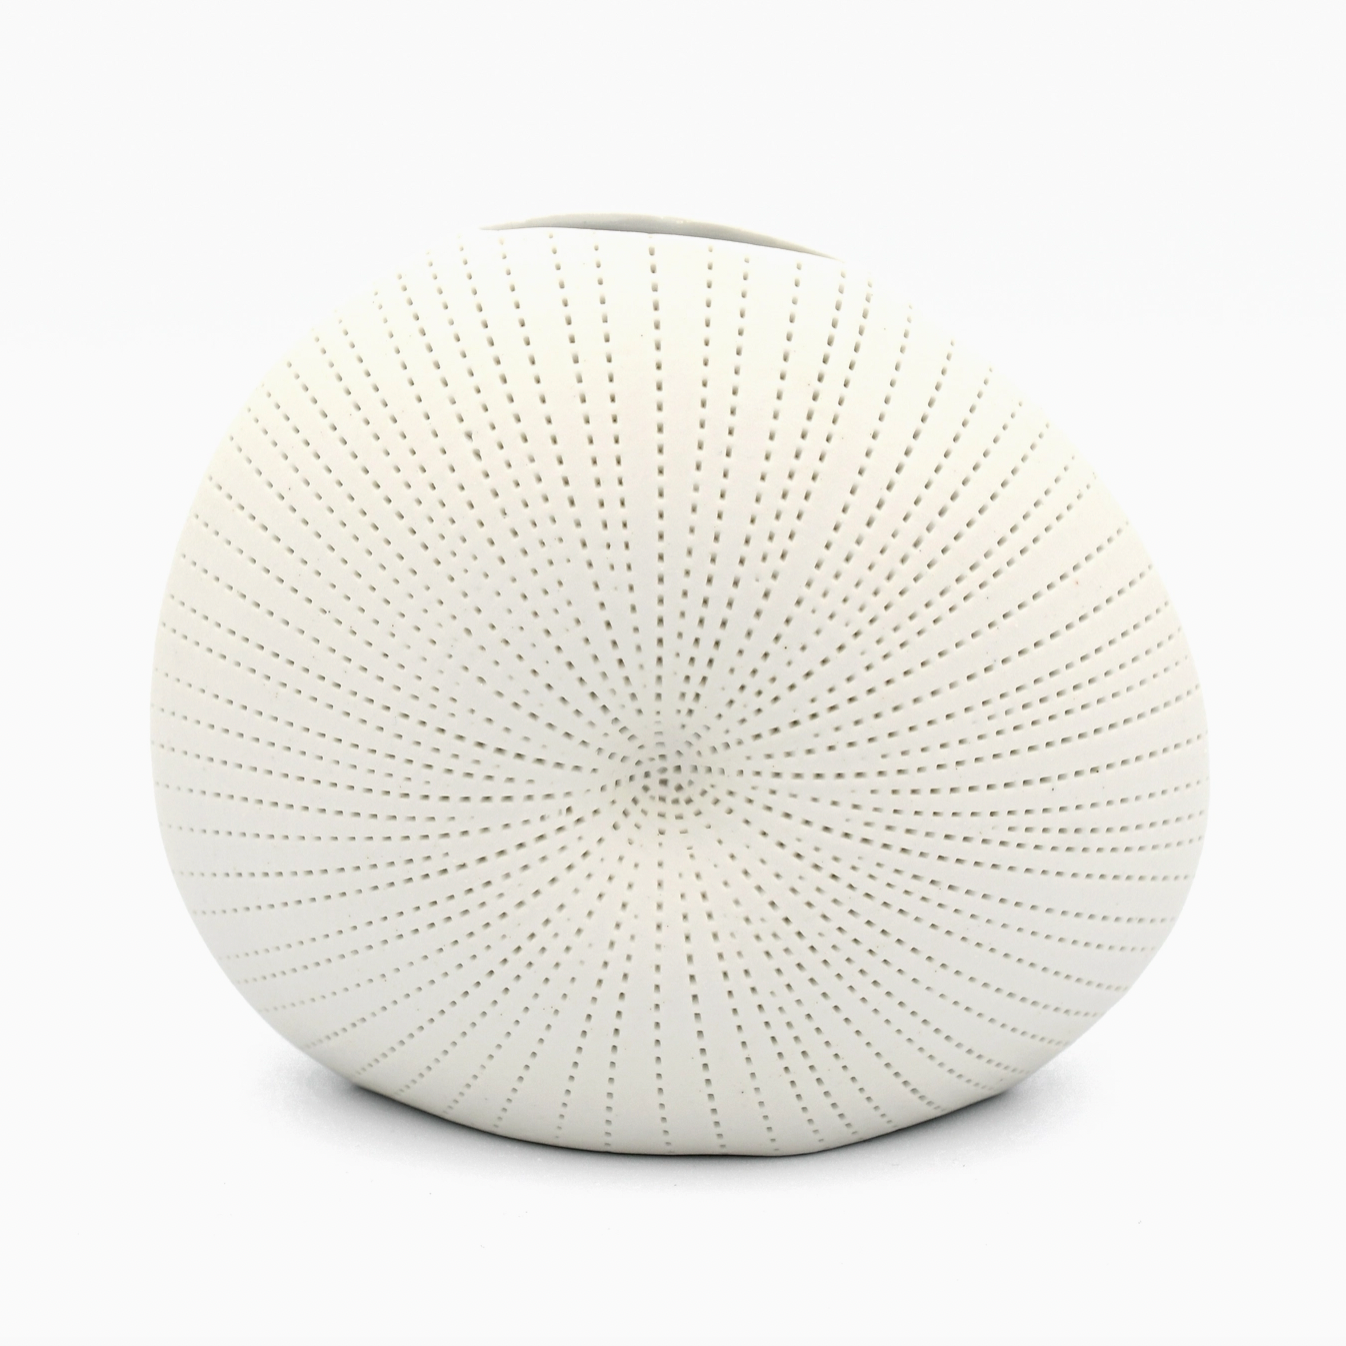 Handmade Seashell Vase, Small, White Dots